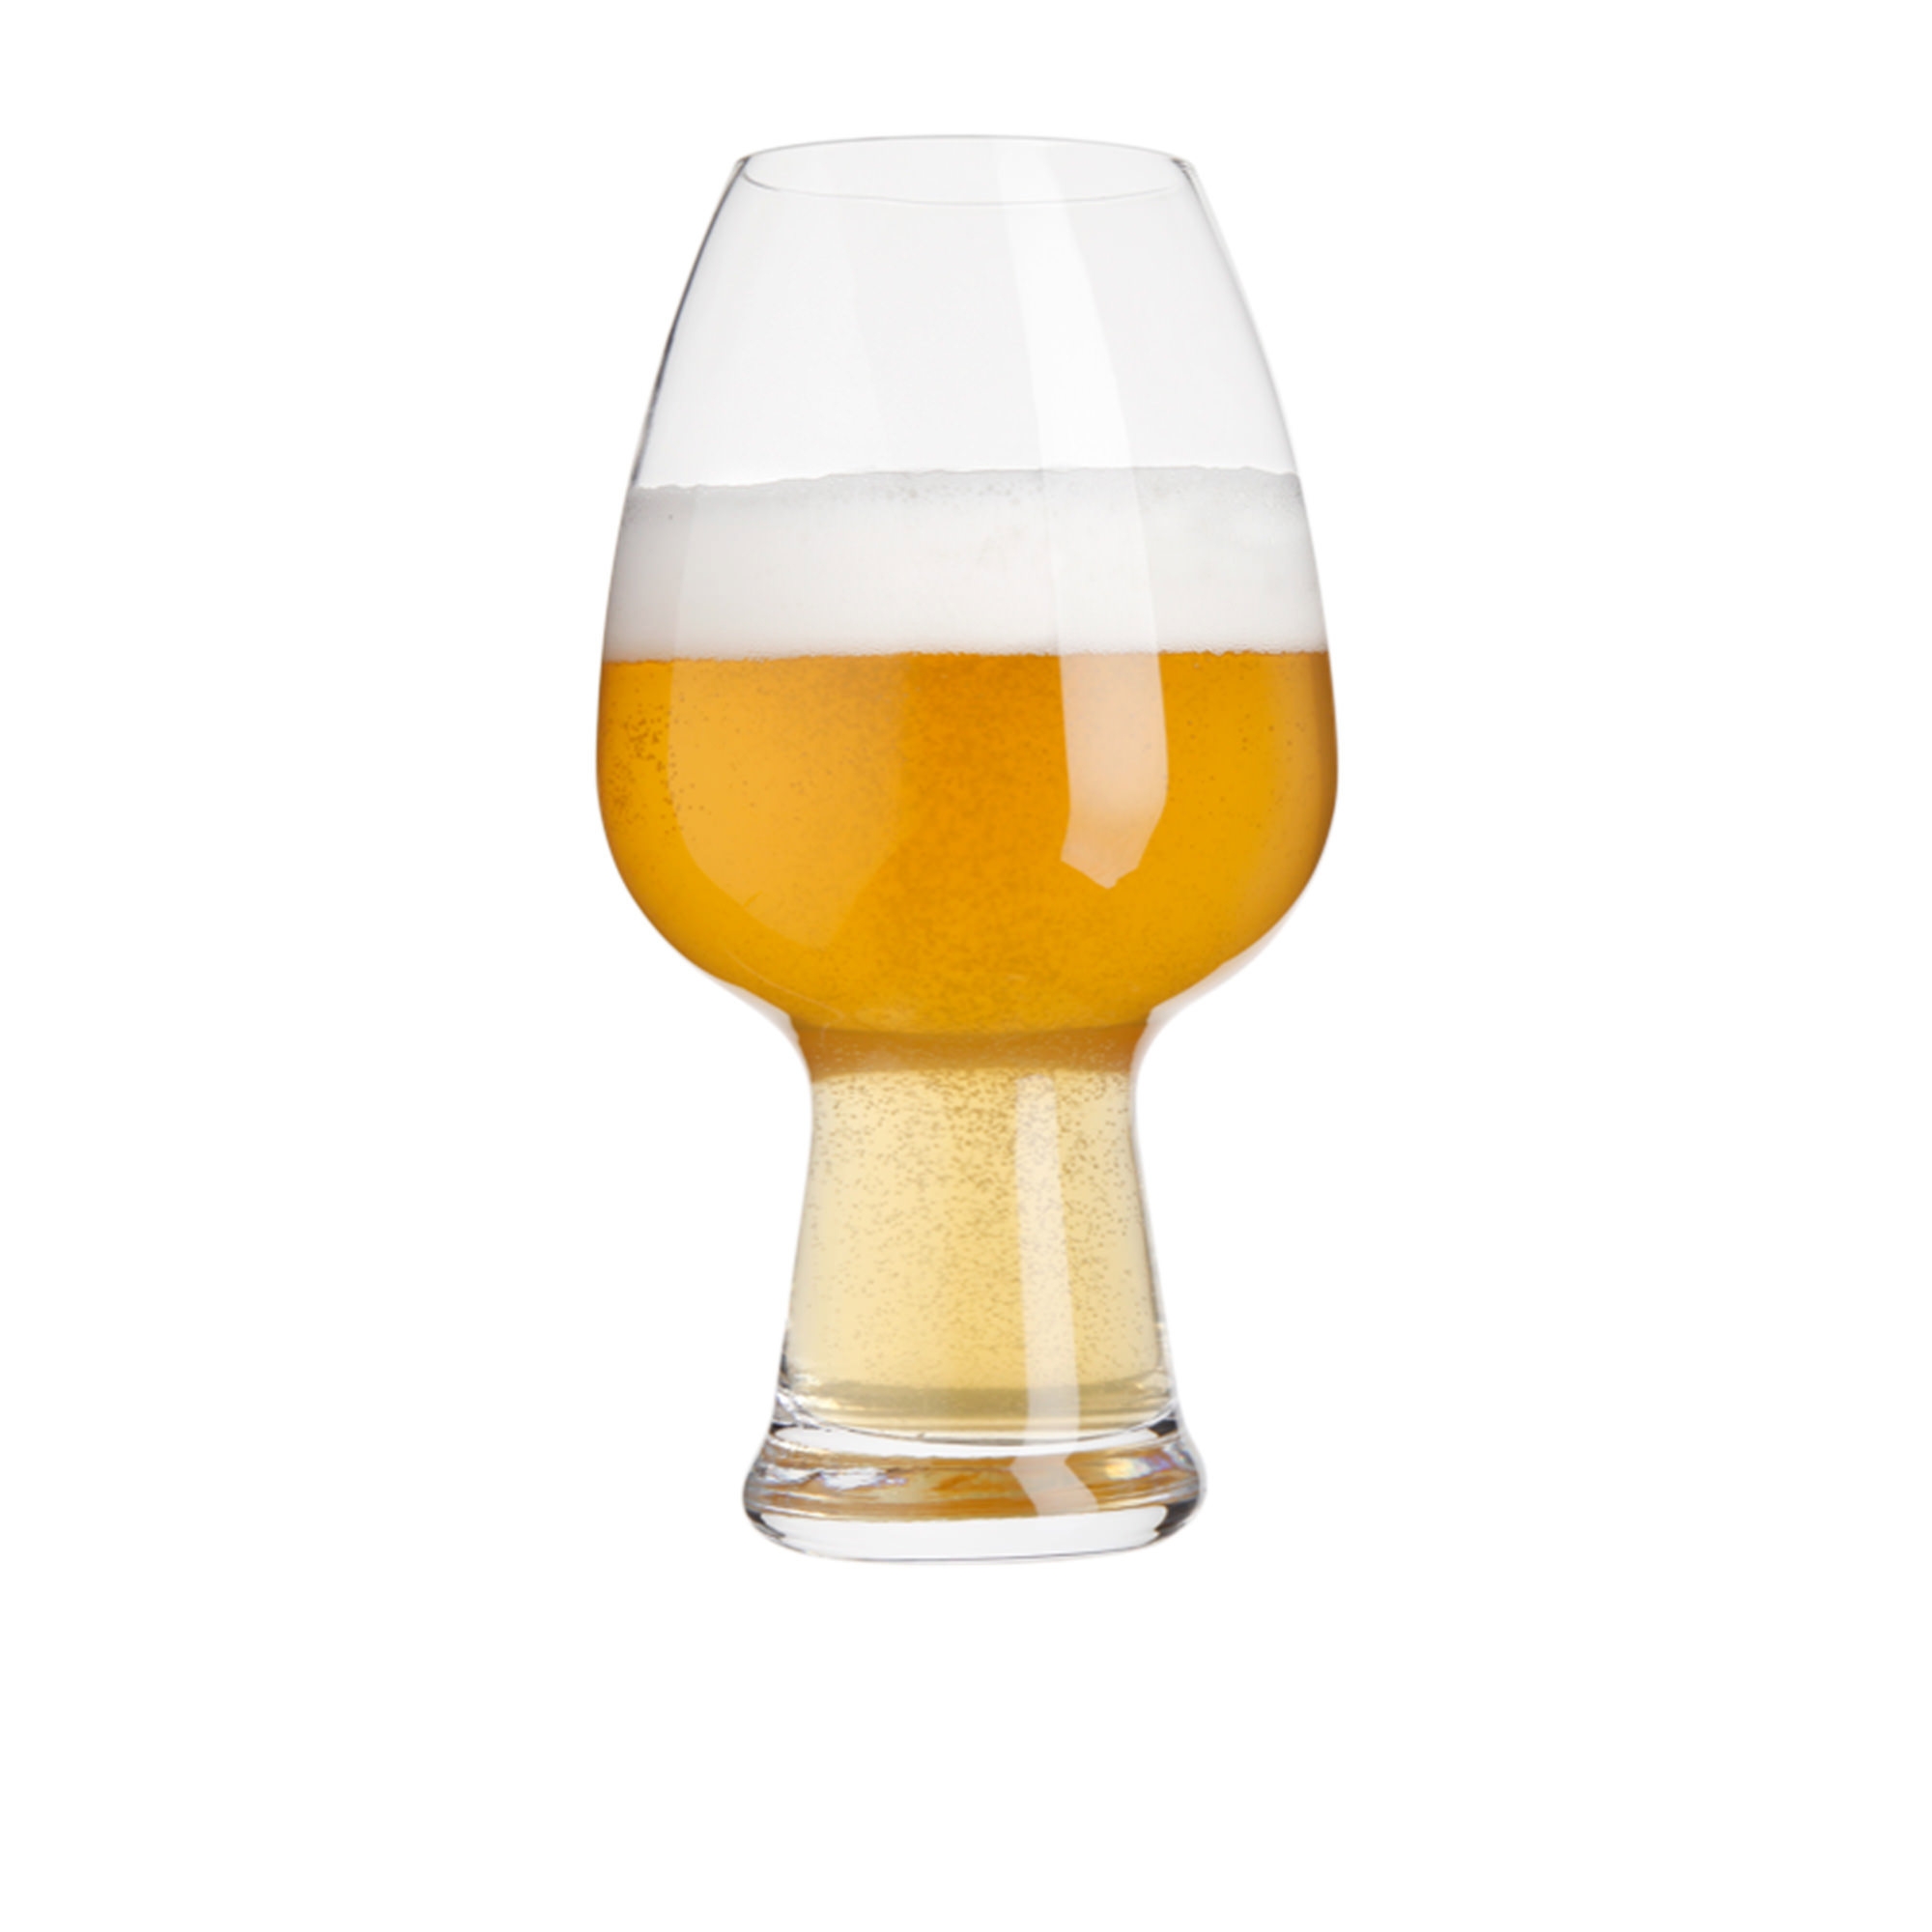 Luigi Bormioli Birrateque Wheat Beer Glass 780ml Set of 2 Image 2